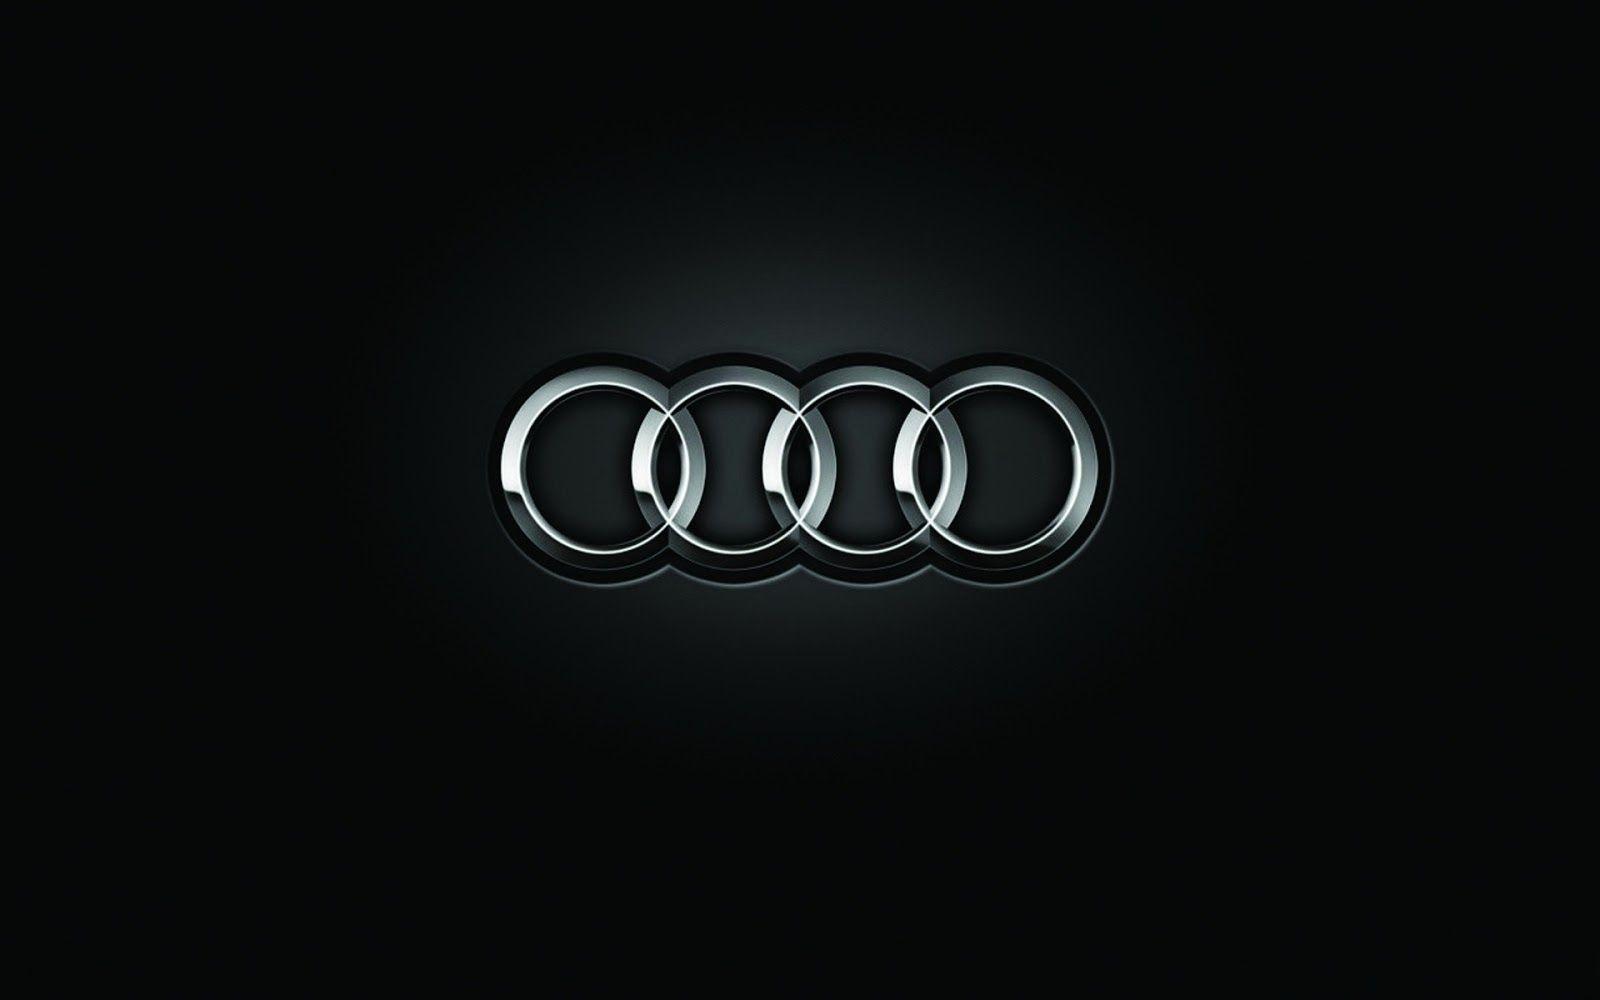 Four Circle Car Logo - Audi Logo, Audi Car Symbol Meaning and History | Car Brand Names.com